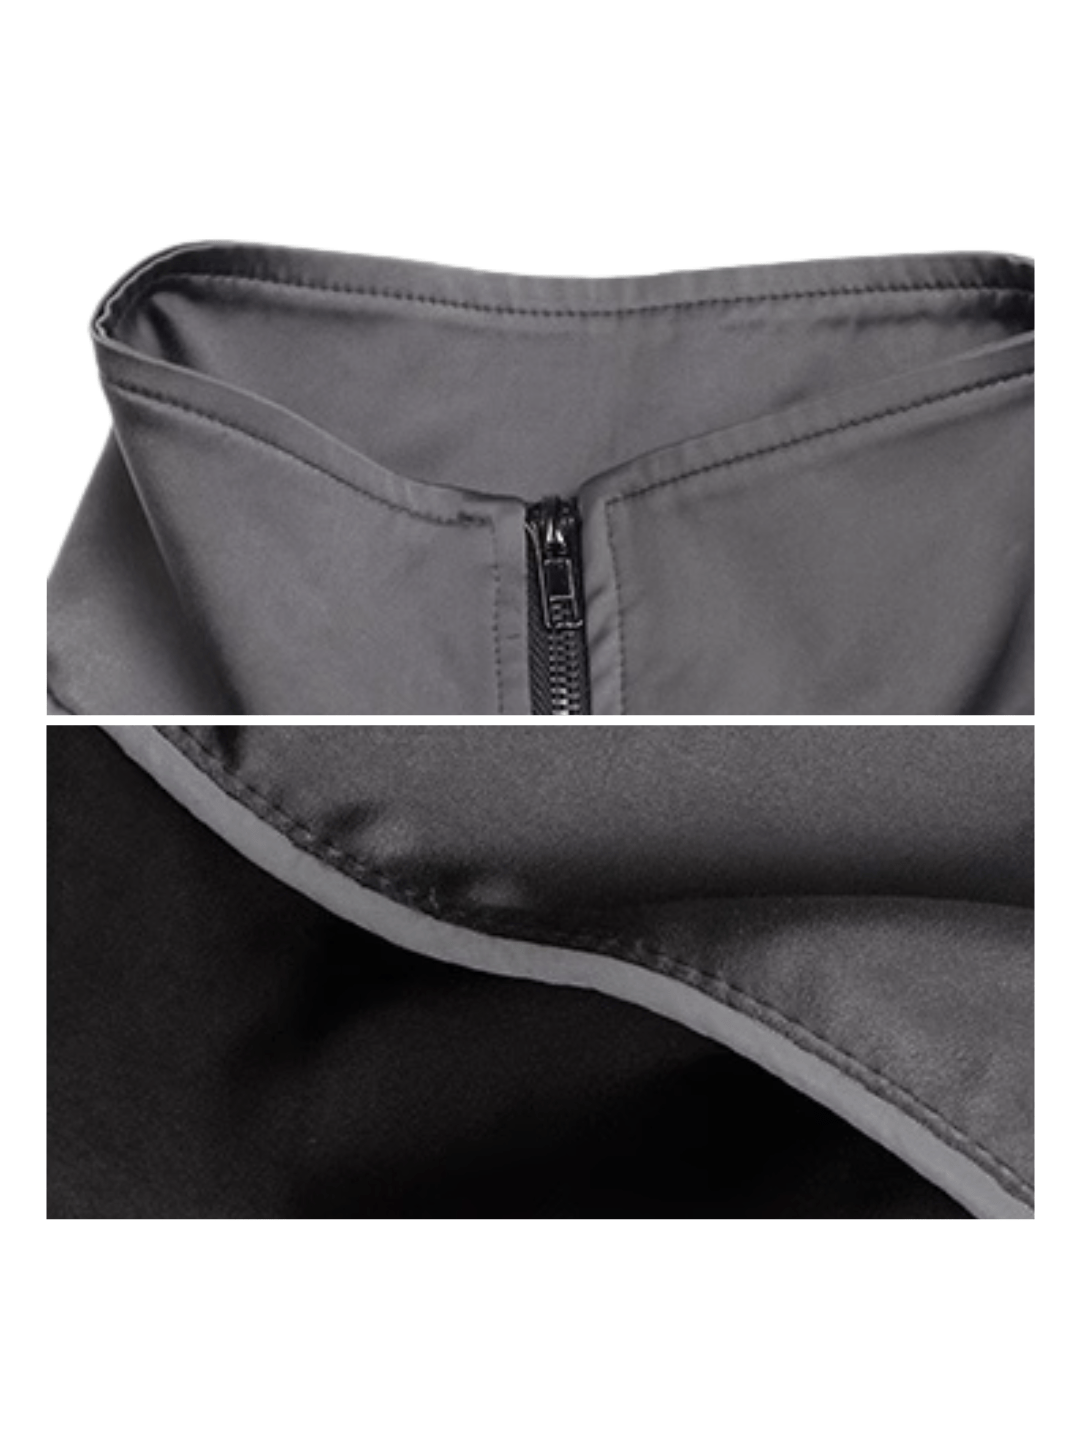 [CROWORLD] Metallic luster texture nylon flight jacket na700